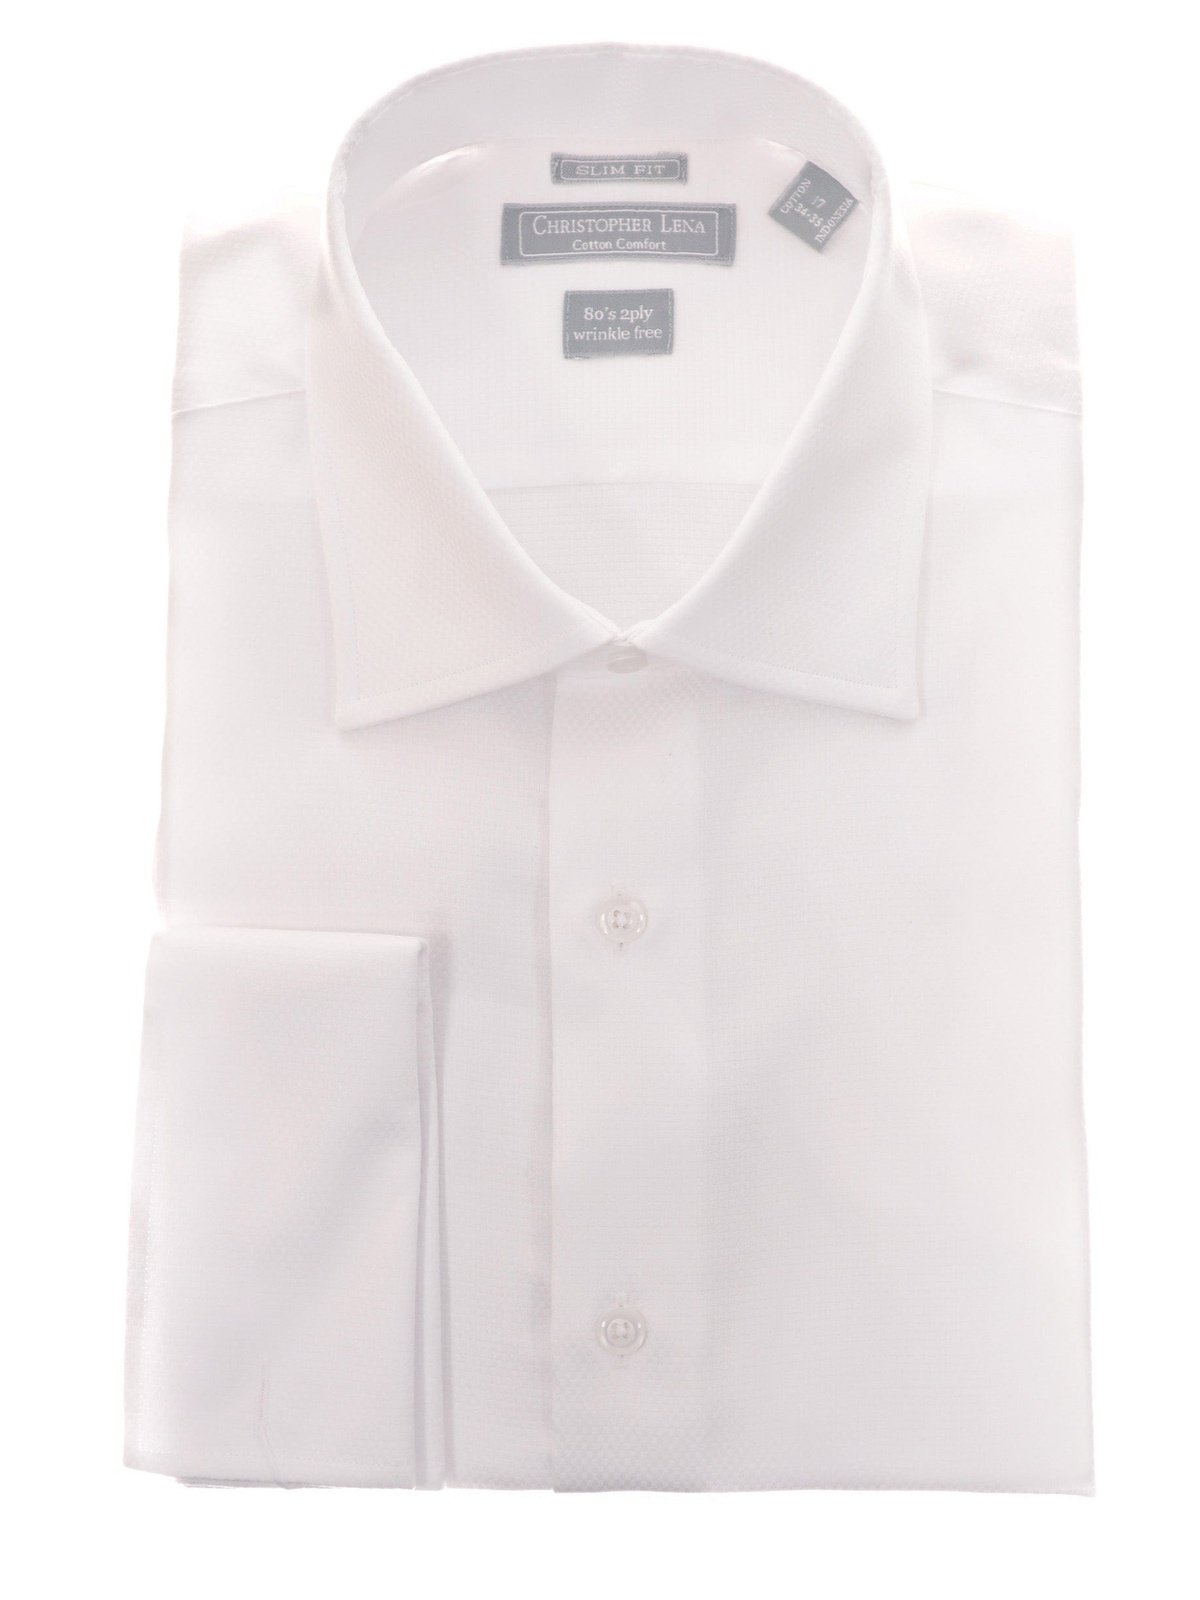 Men's Slim Fit White Textured Spread Collar French Cuff Cotton Dress Shirt